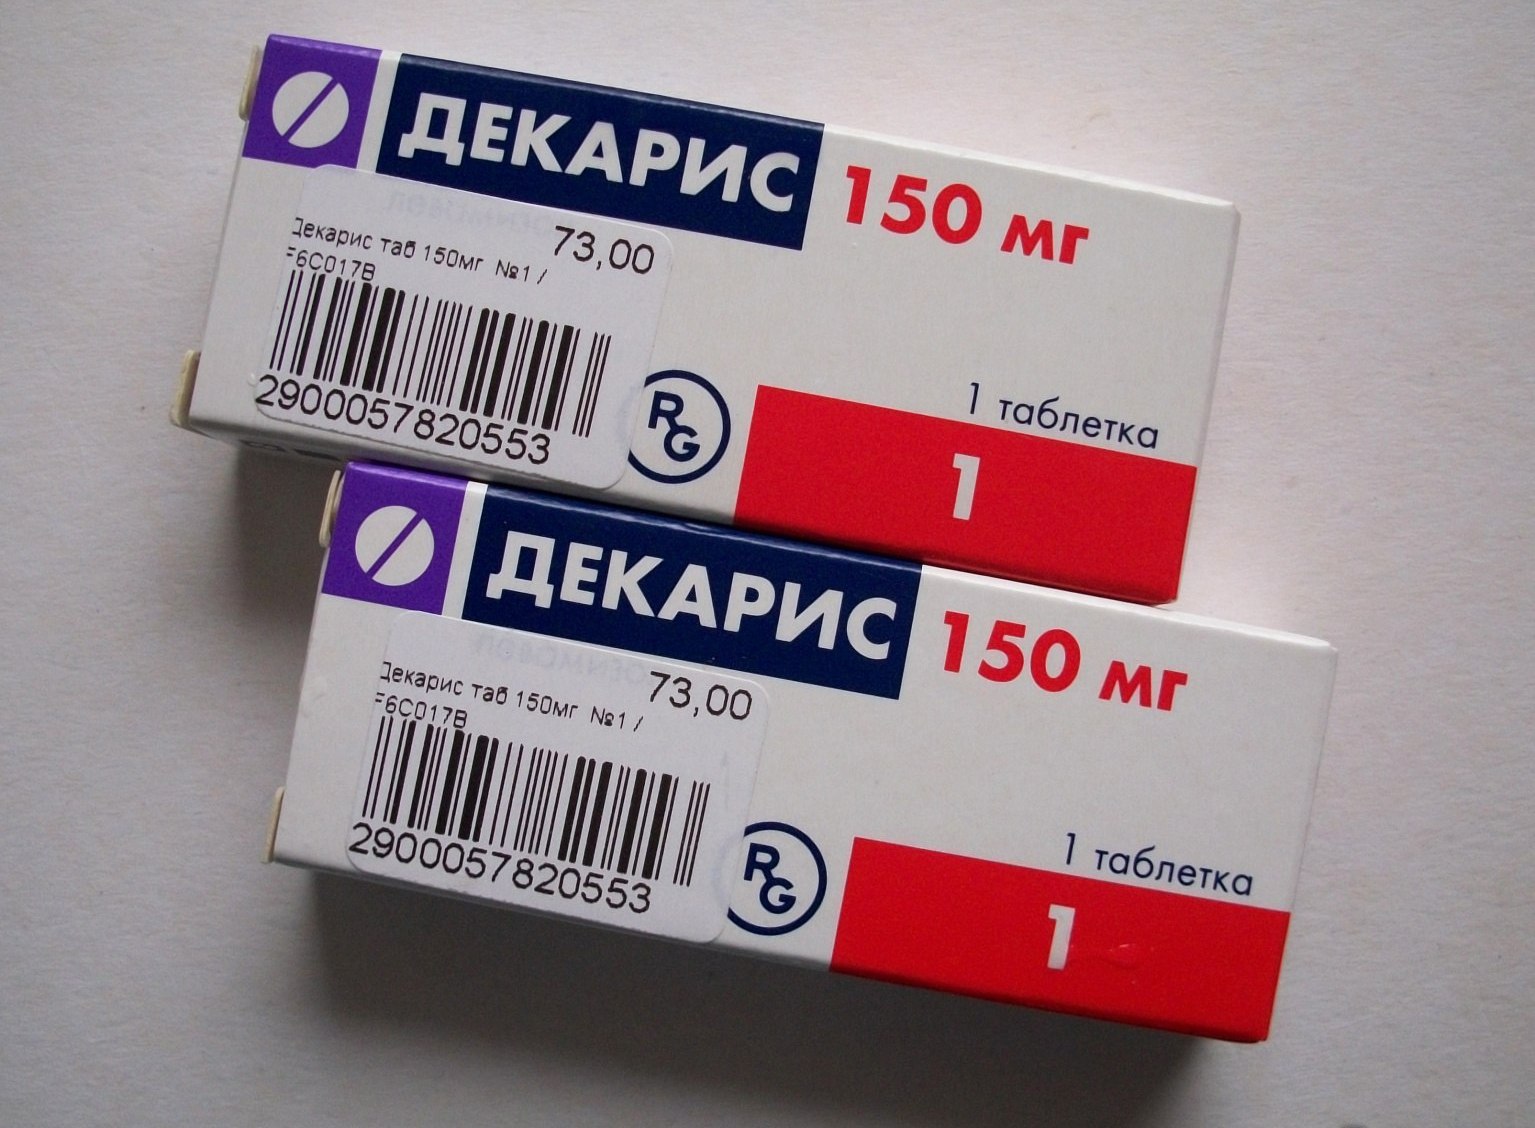 На фото 1 таблетка Декарис 150 мг., цена 73 рубля.